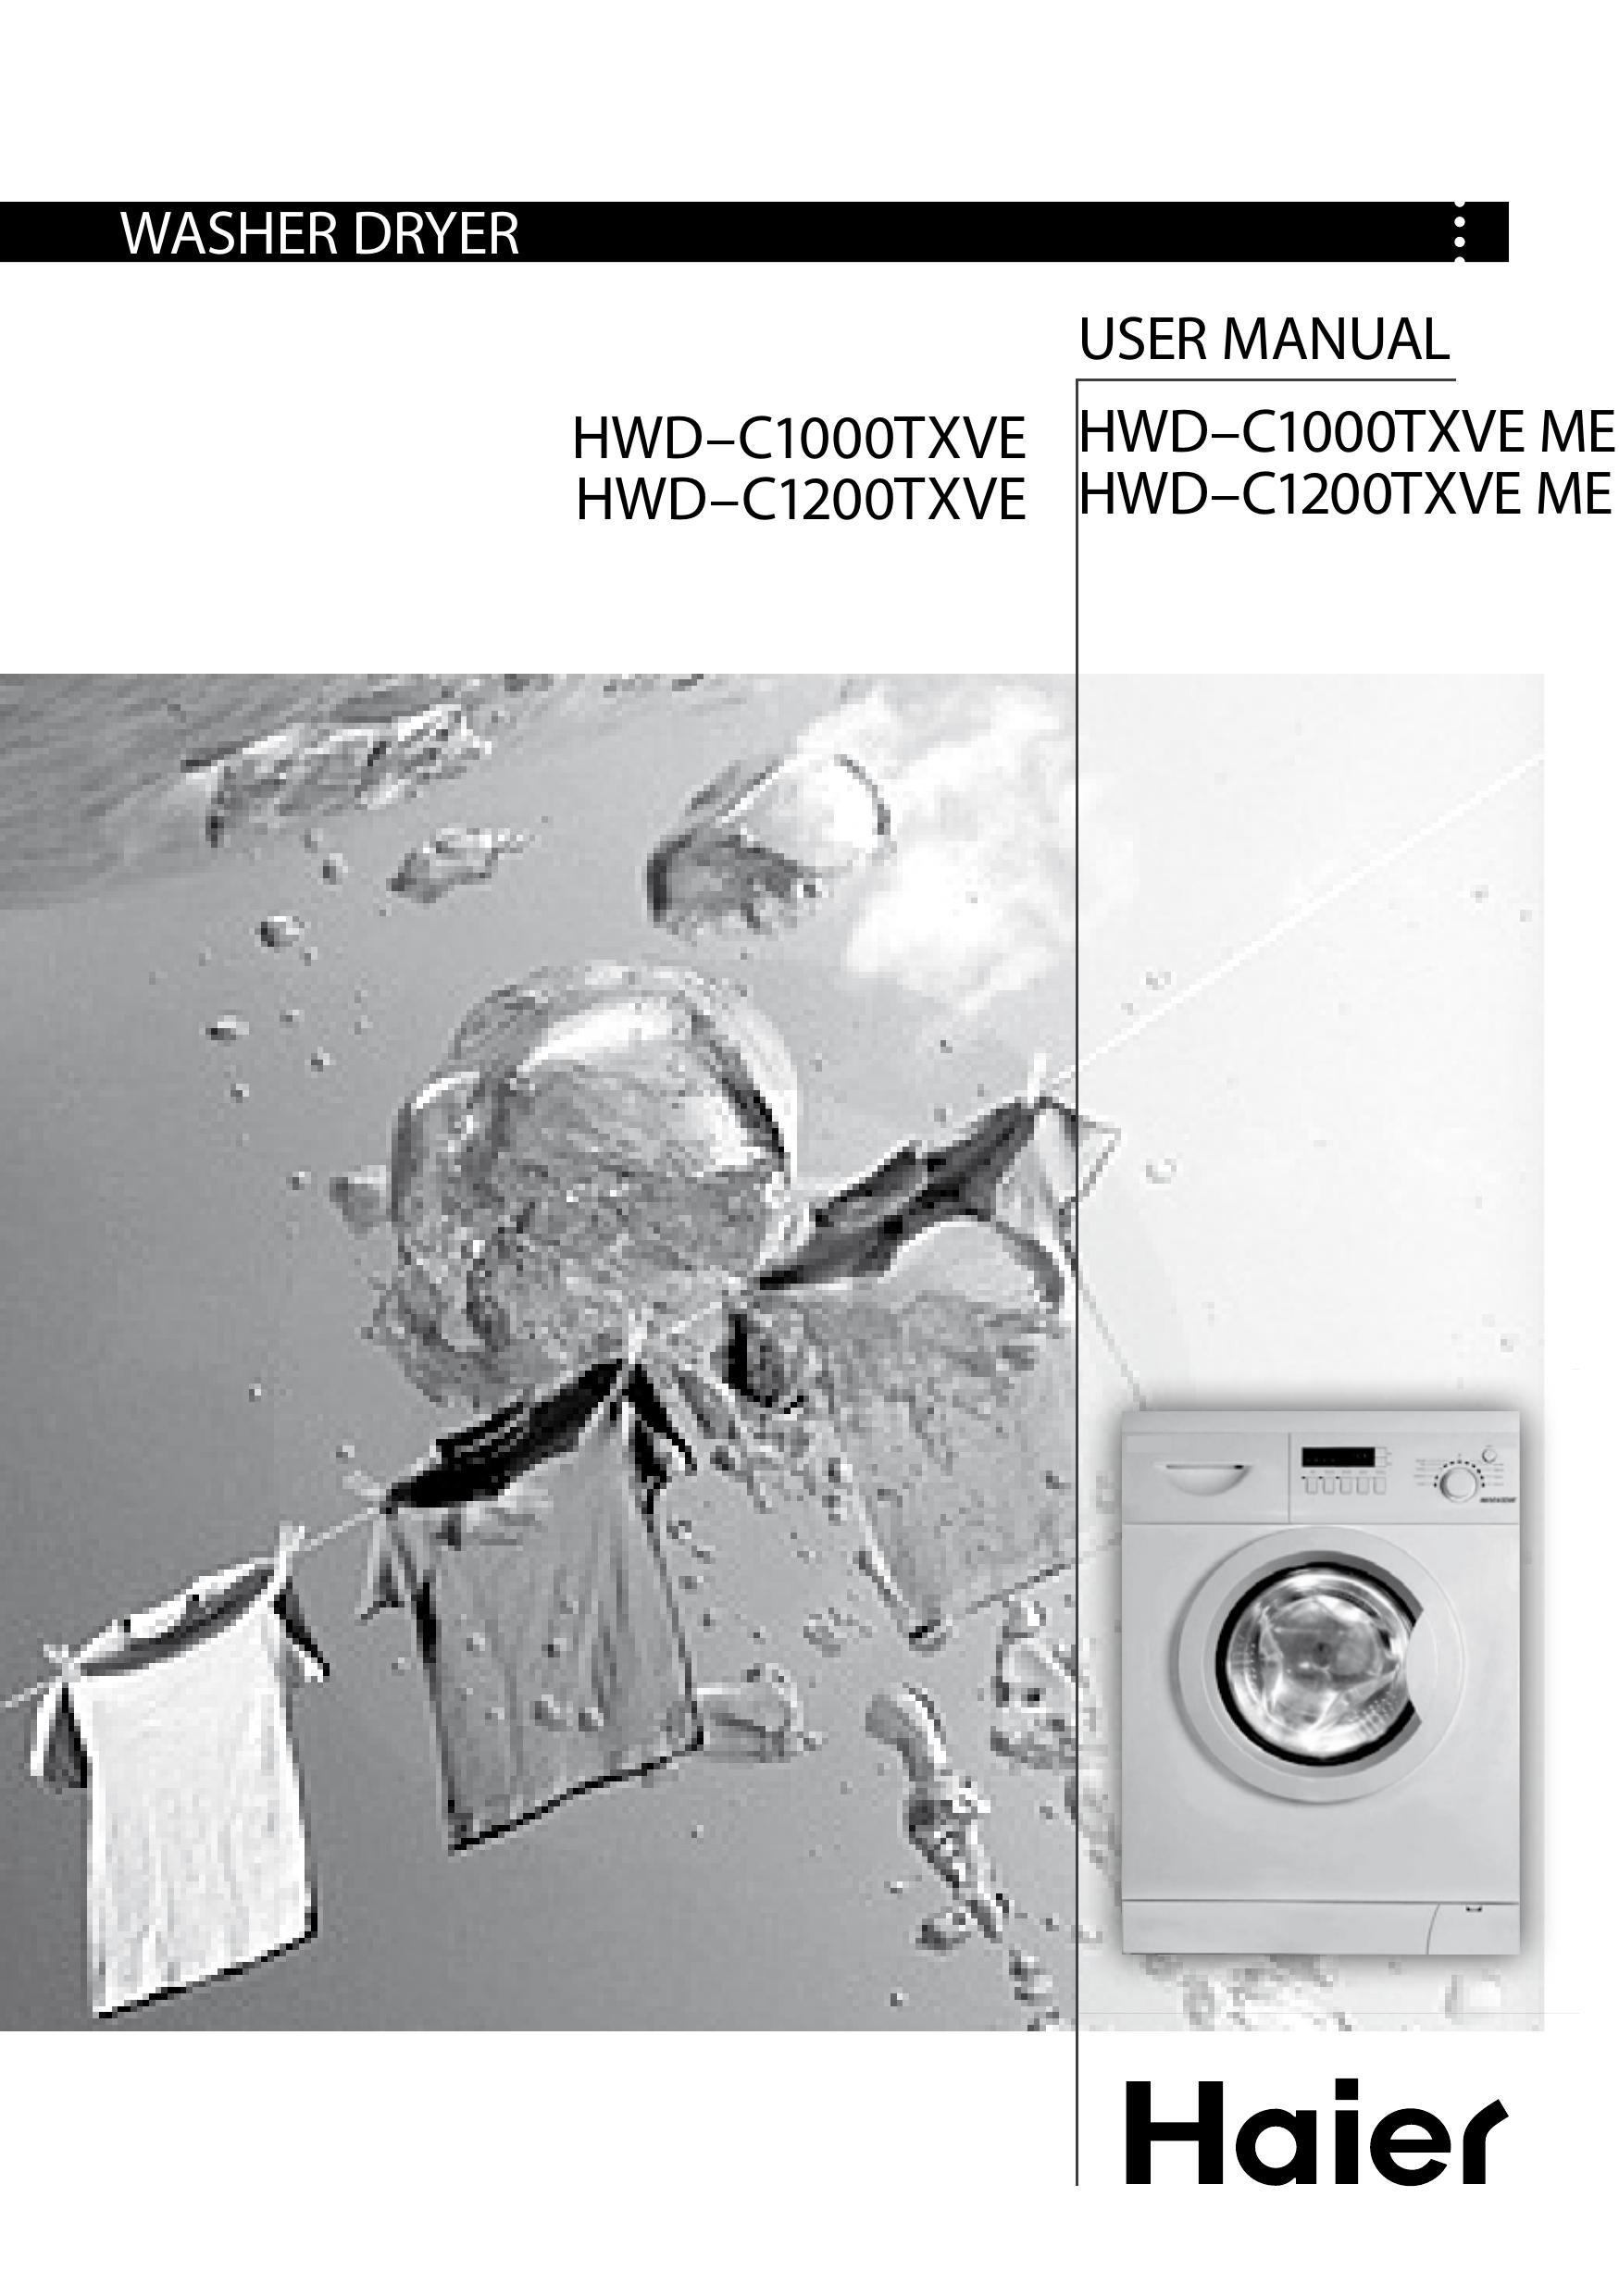 Haier HWDC1200TXVE Washer/Dryer User Manual